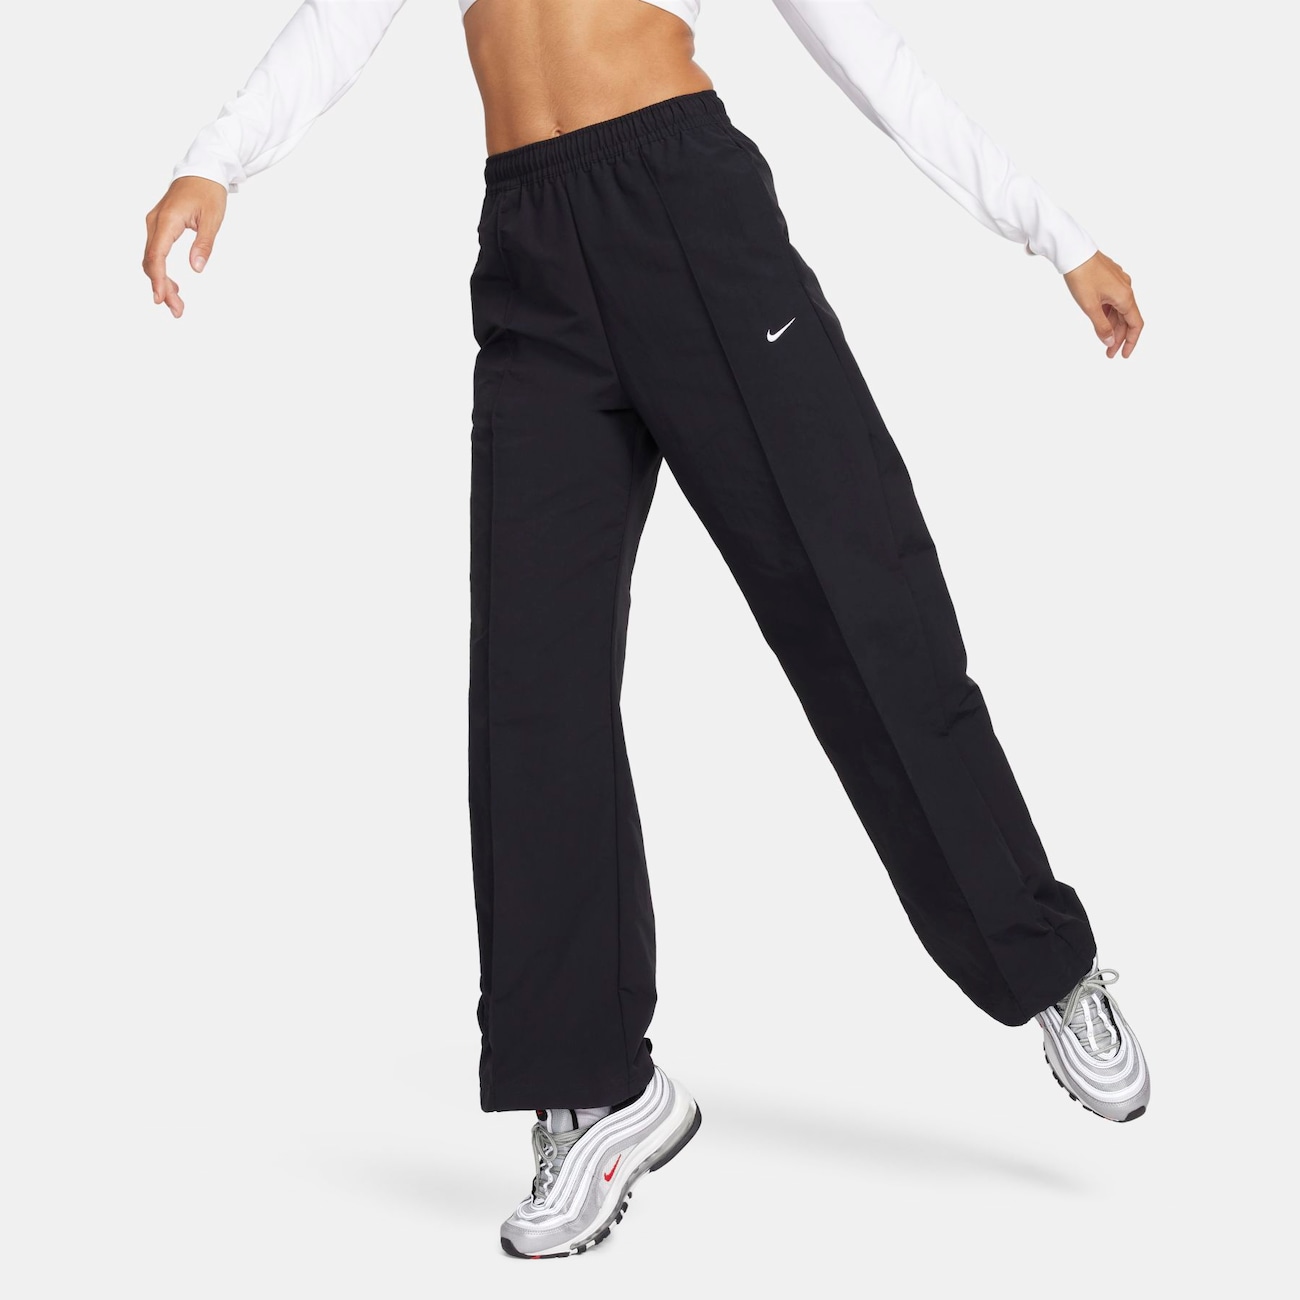 Calça Nike Sportswear Trend Woven Feminina